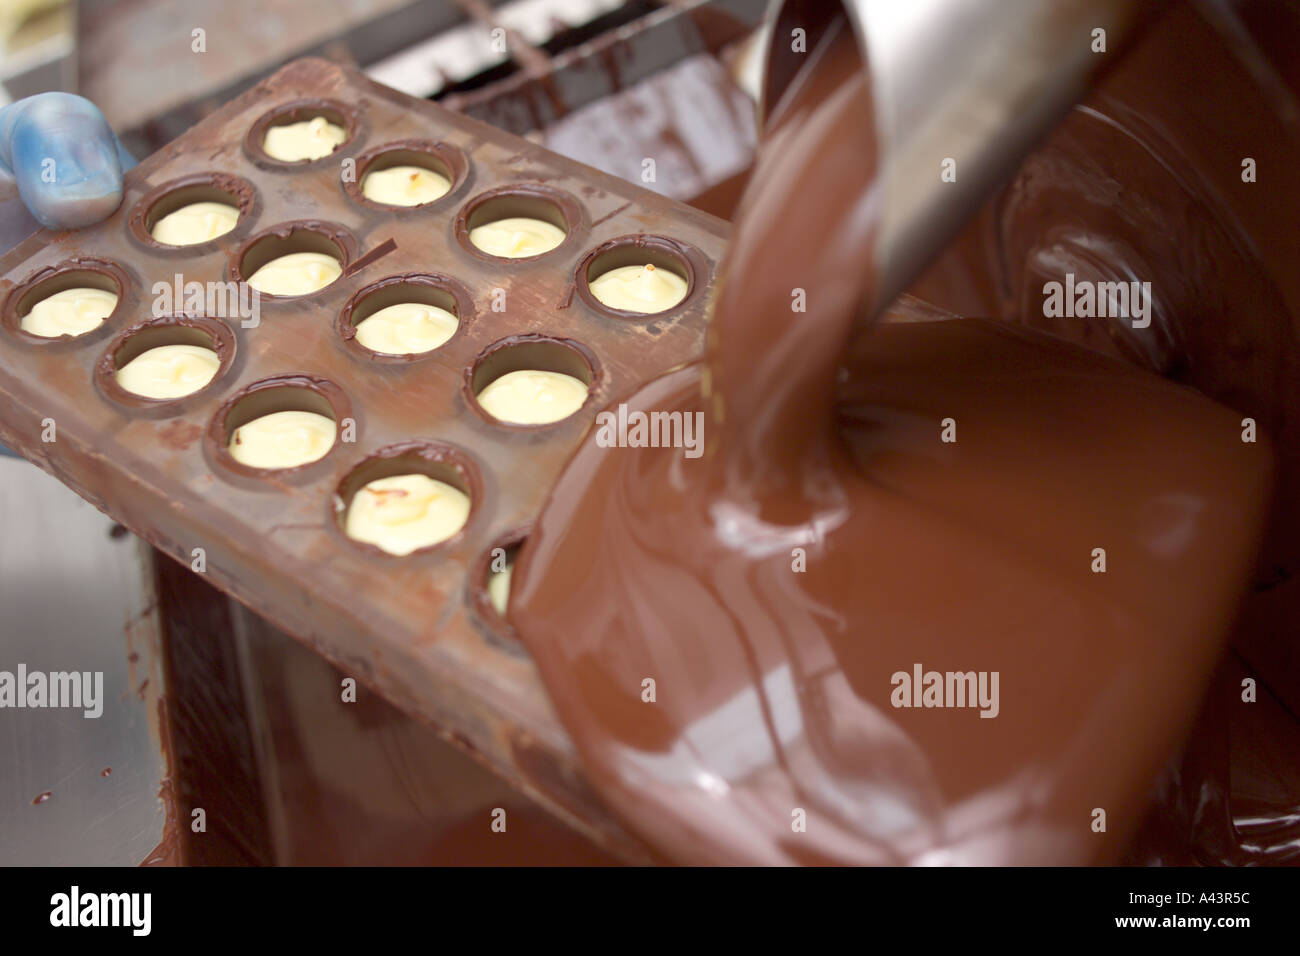 The process of making handmade chocolates Stock Photo